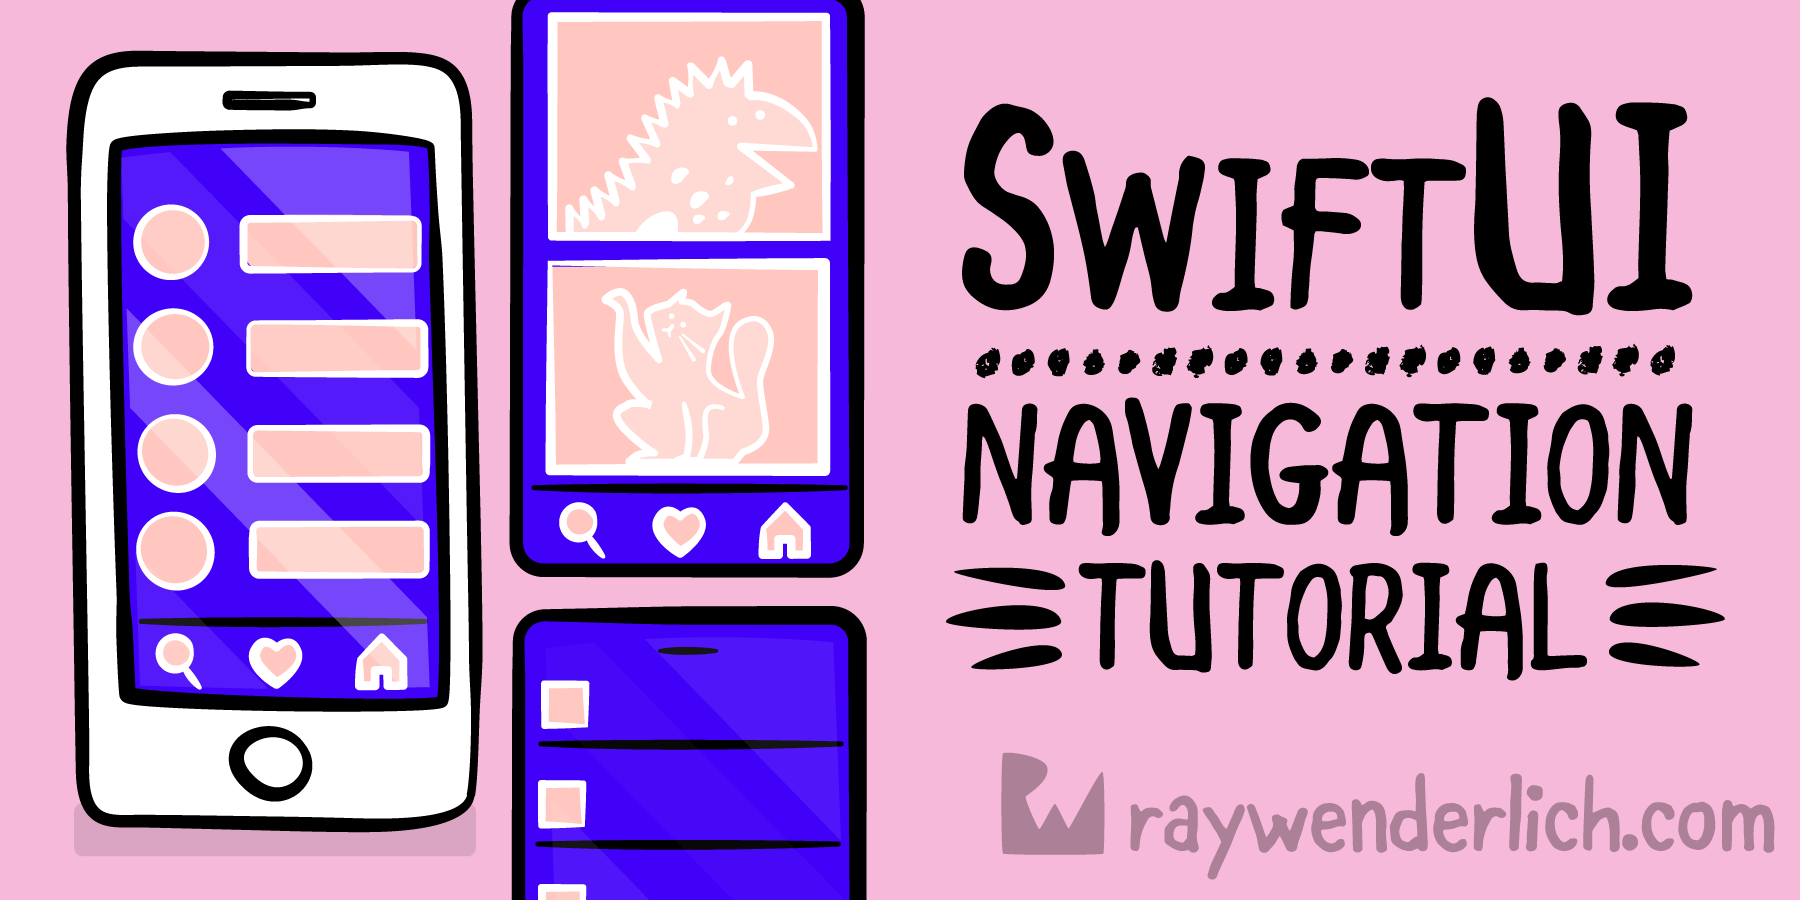 SwiftUI Tutorial: Navigation